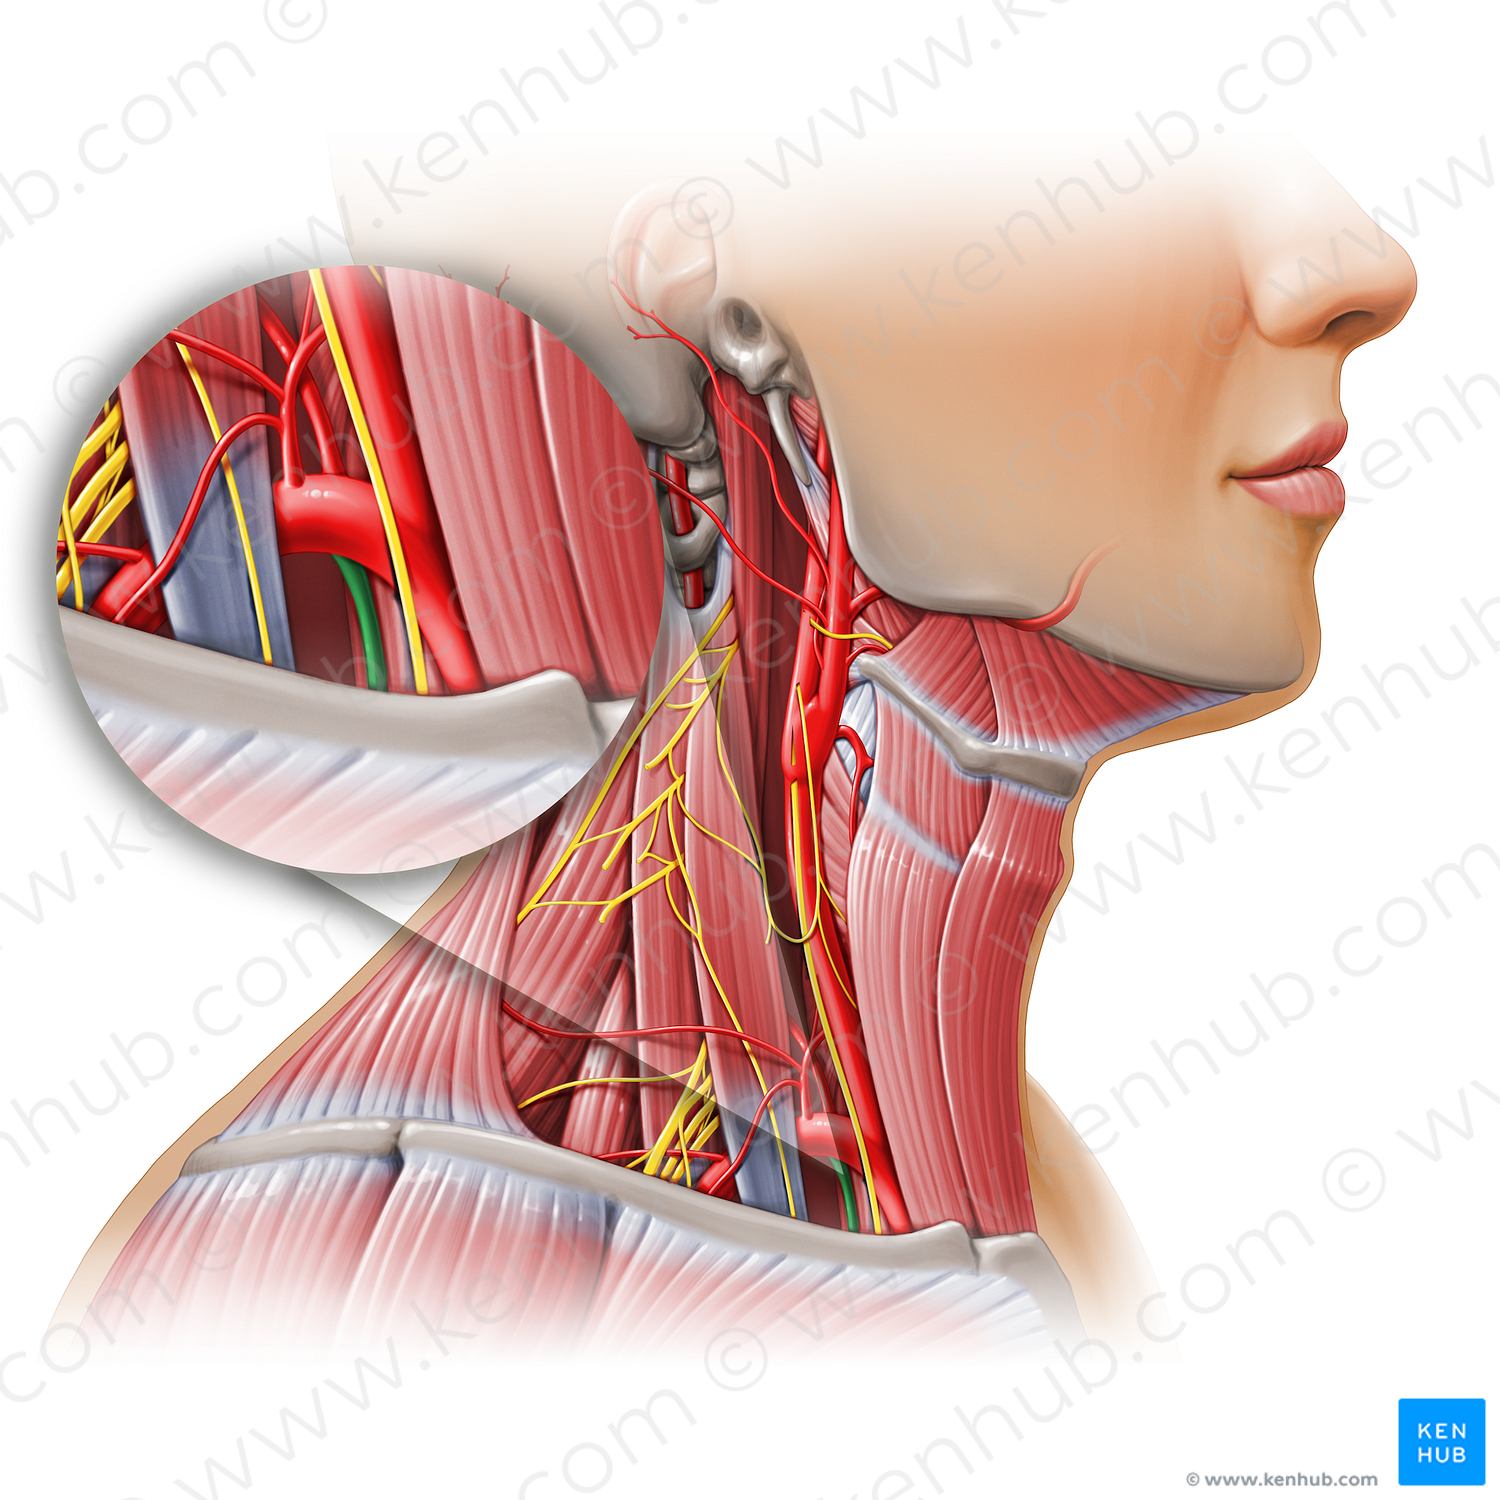 Internal thoracic artery (#11137)